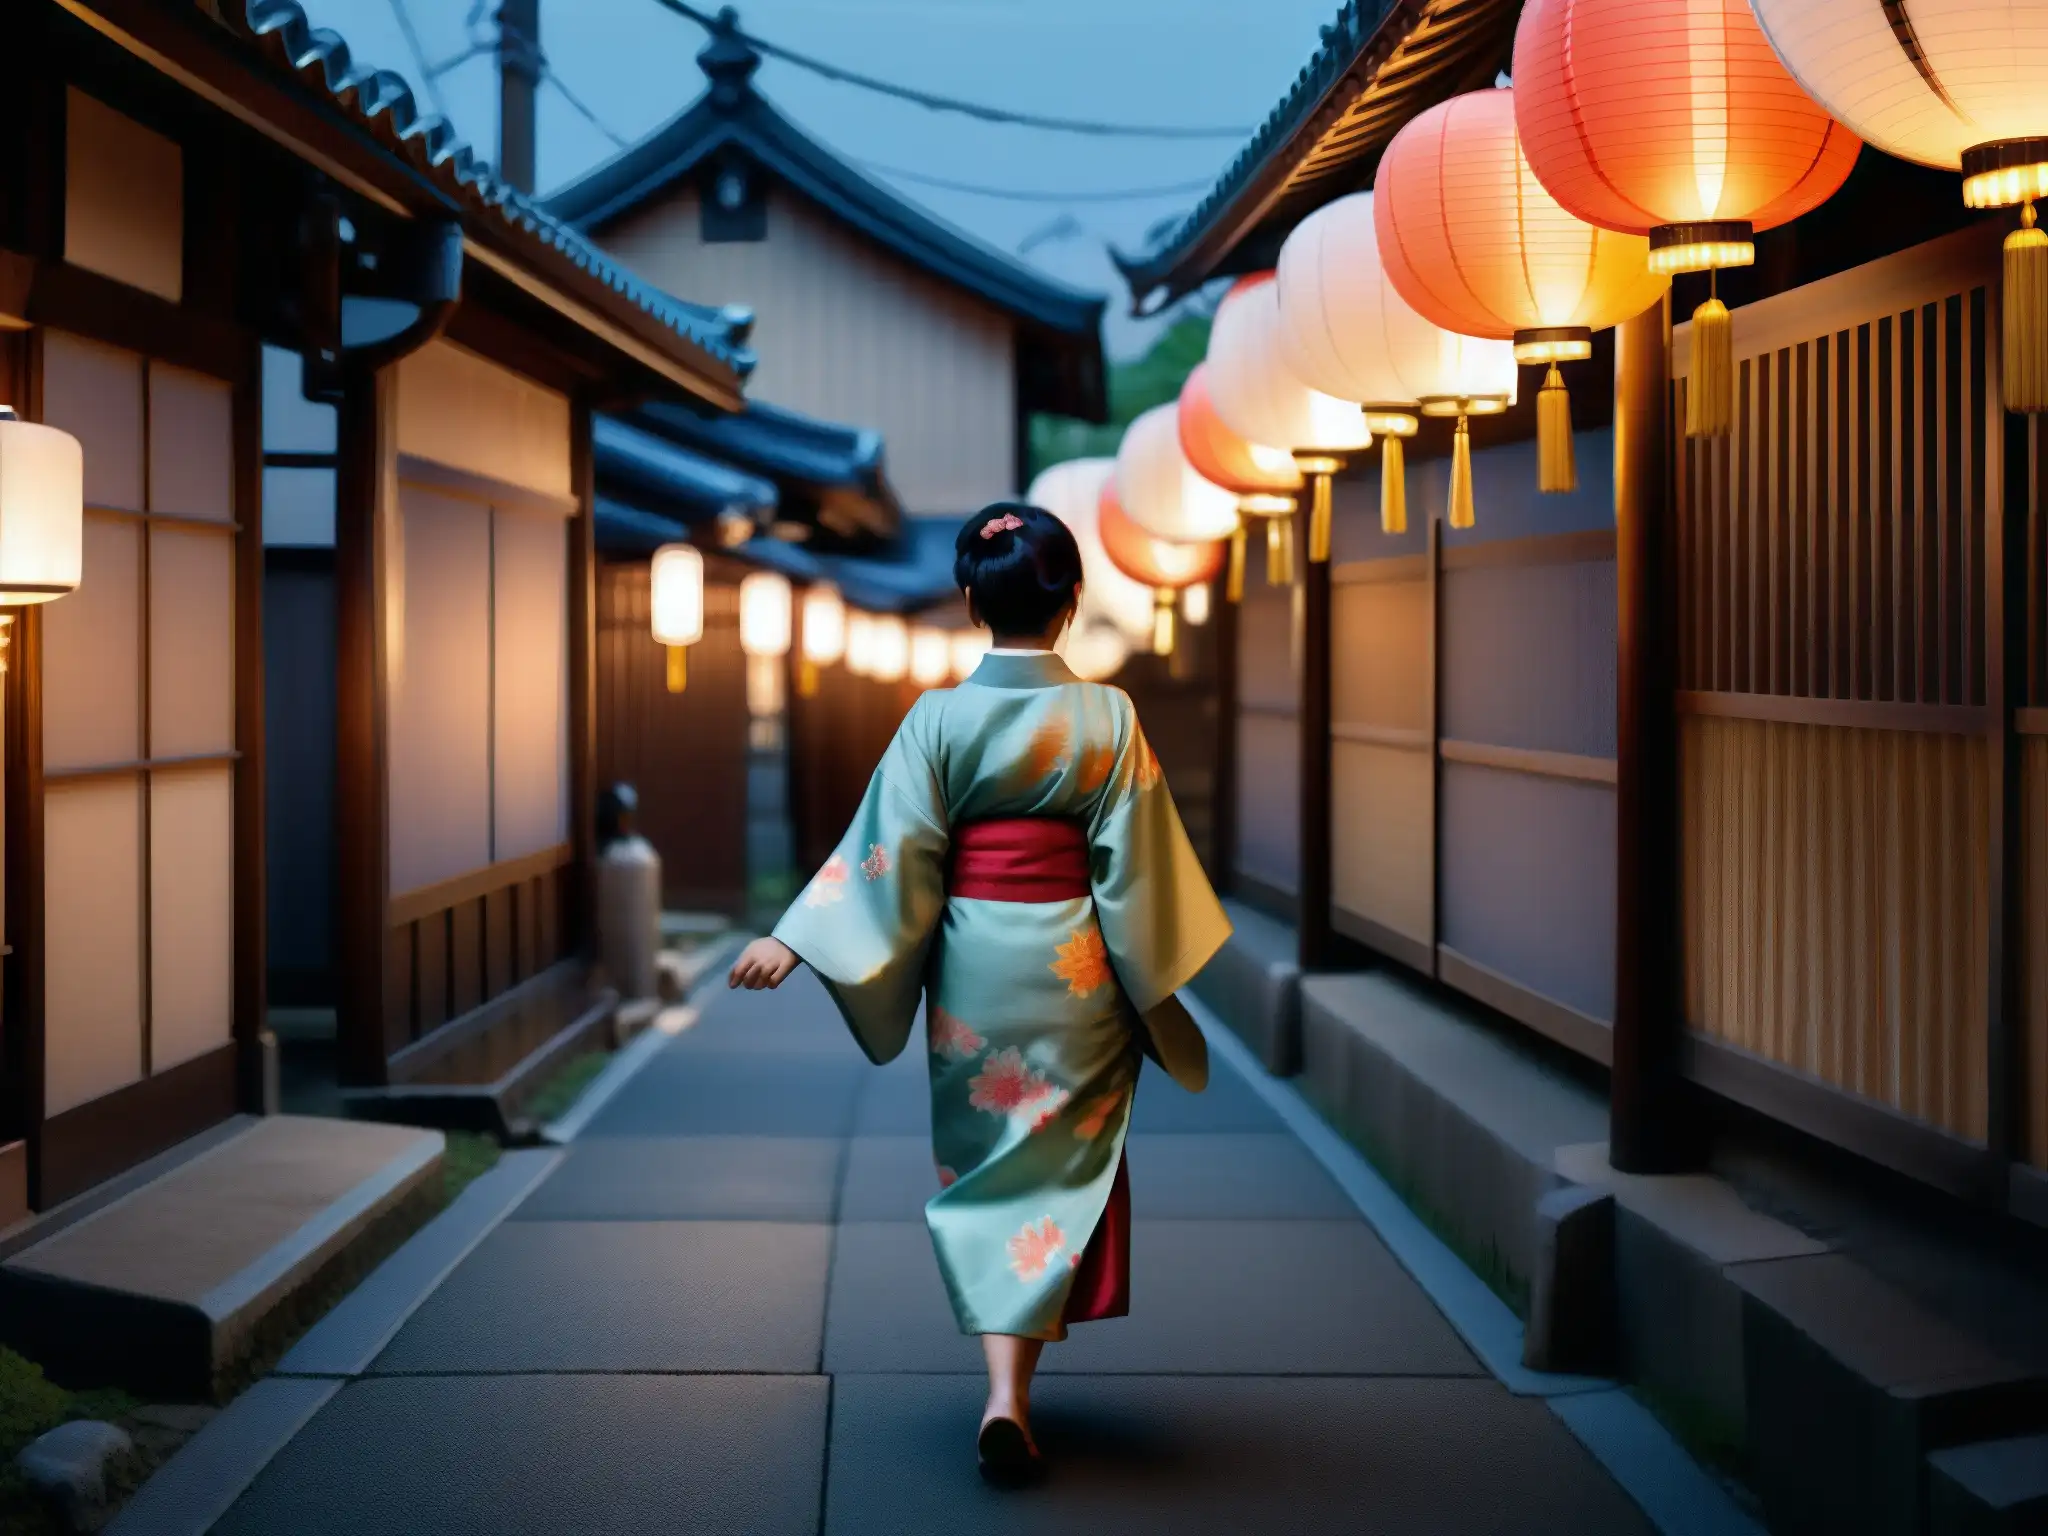 Una figura solitaria camina en una misteriosa calle japonesa al anochecer, evocando el origen del mito japonés KuchisakeOnna